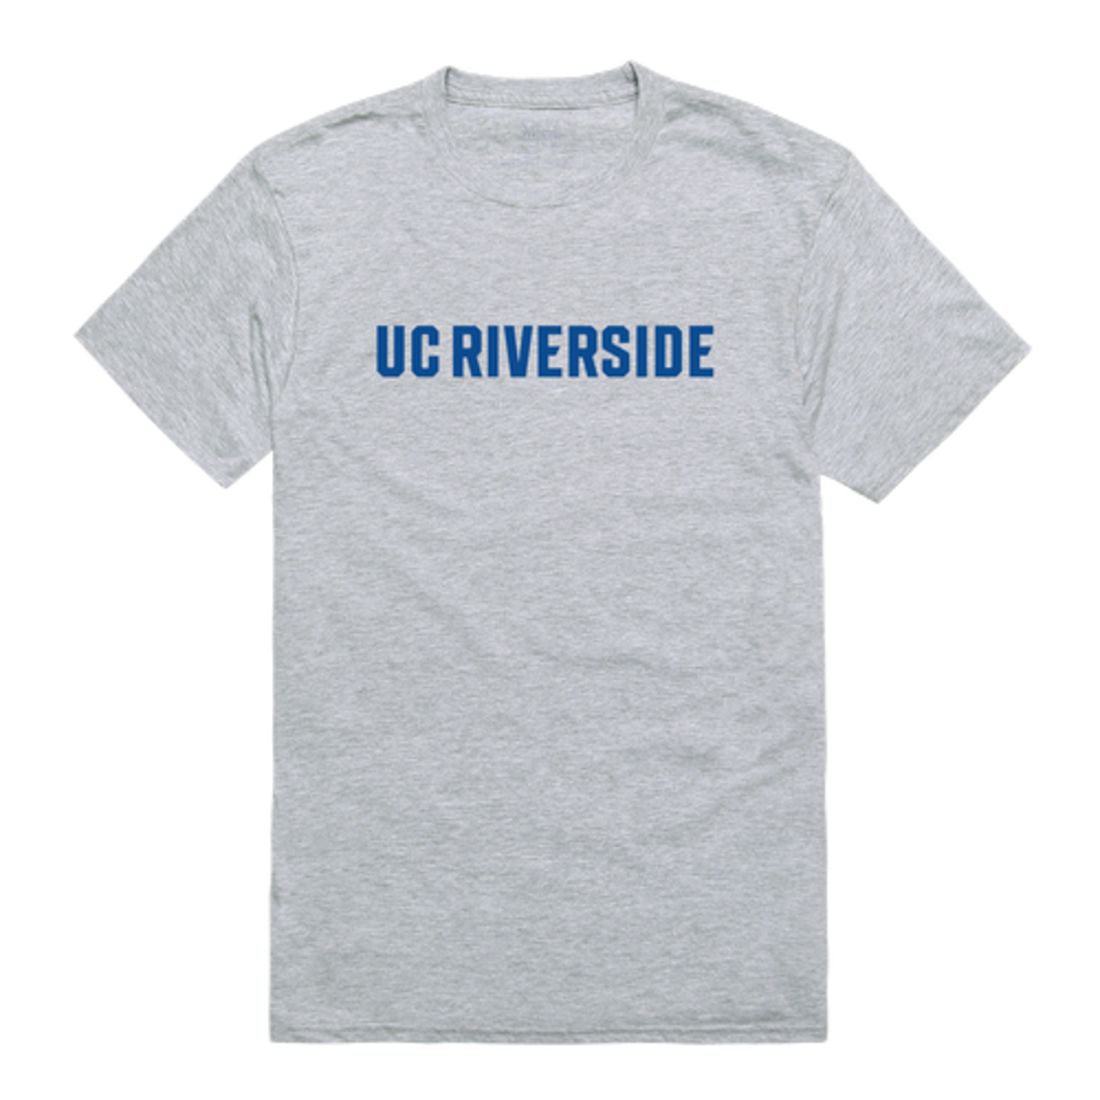 Virginia Union University Panthers Game Day T-Shirt